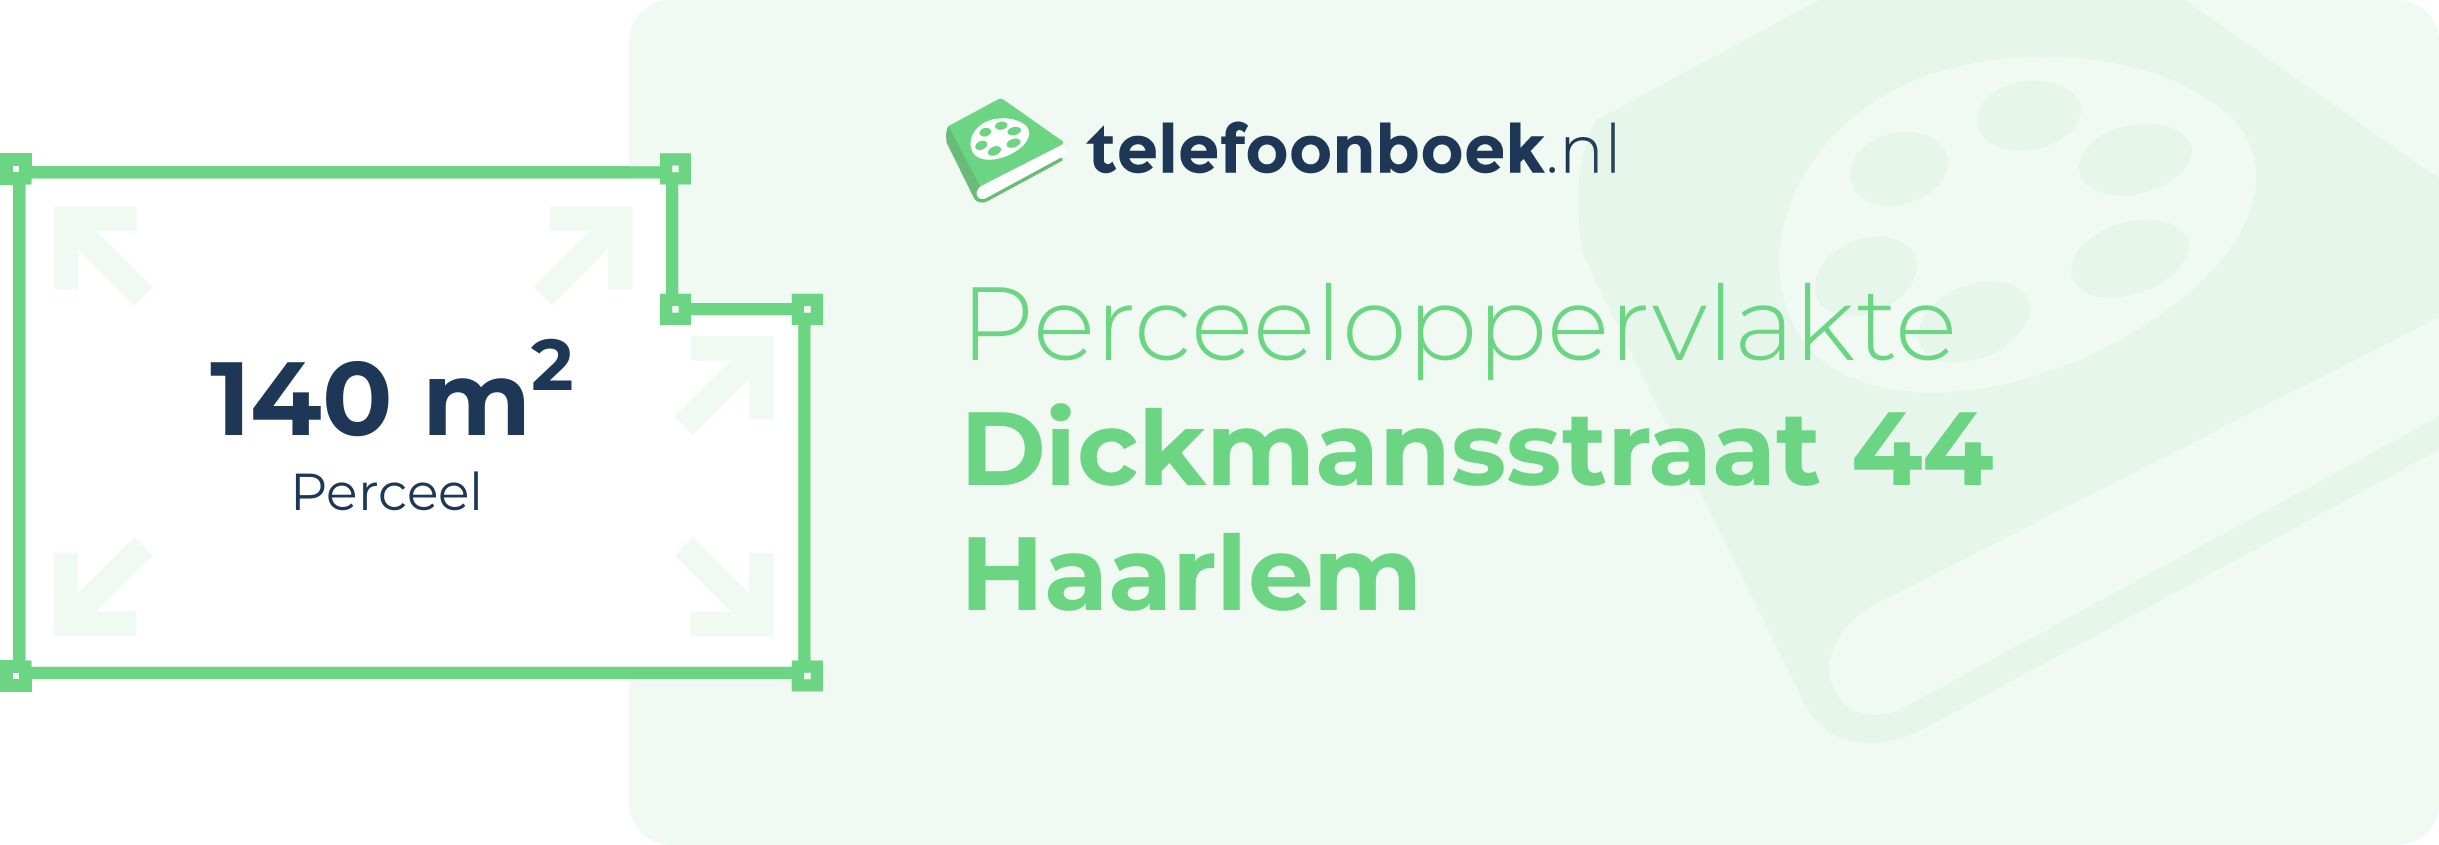 Perceeloppervlakte Dickmansstraat 44 Haarlem